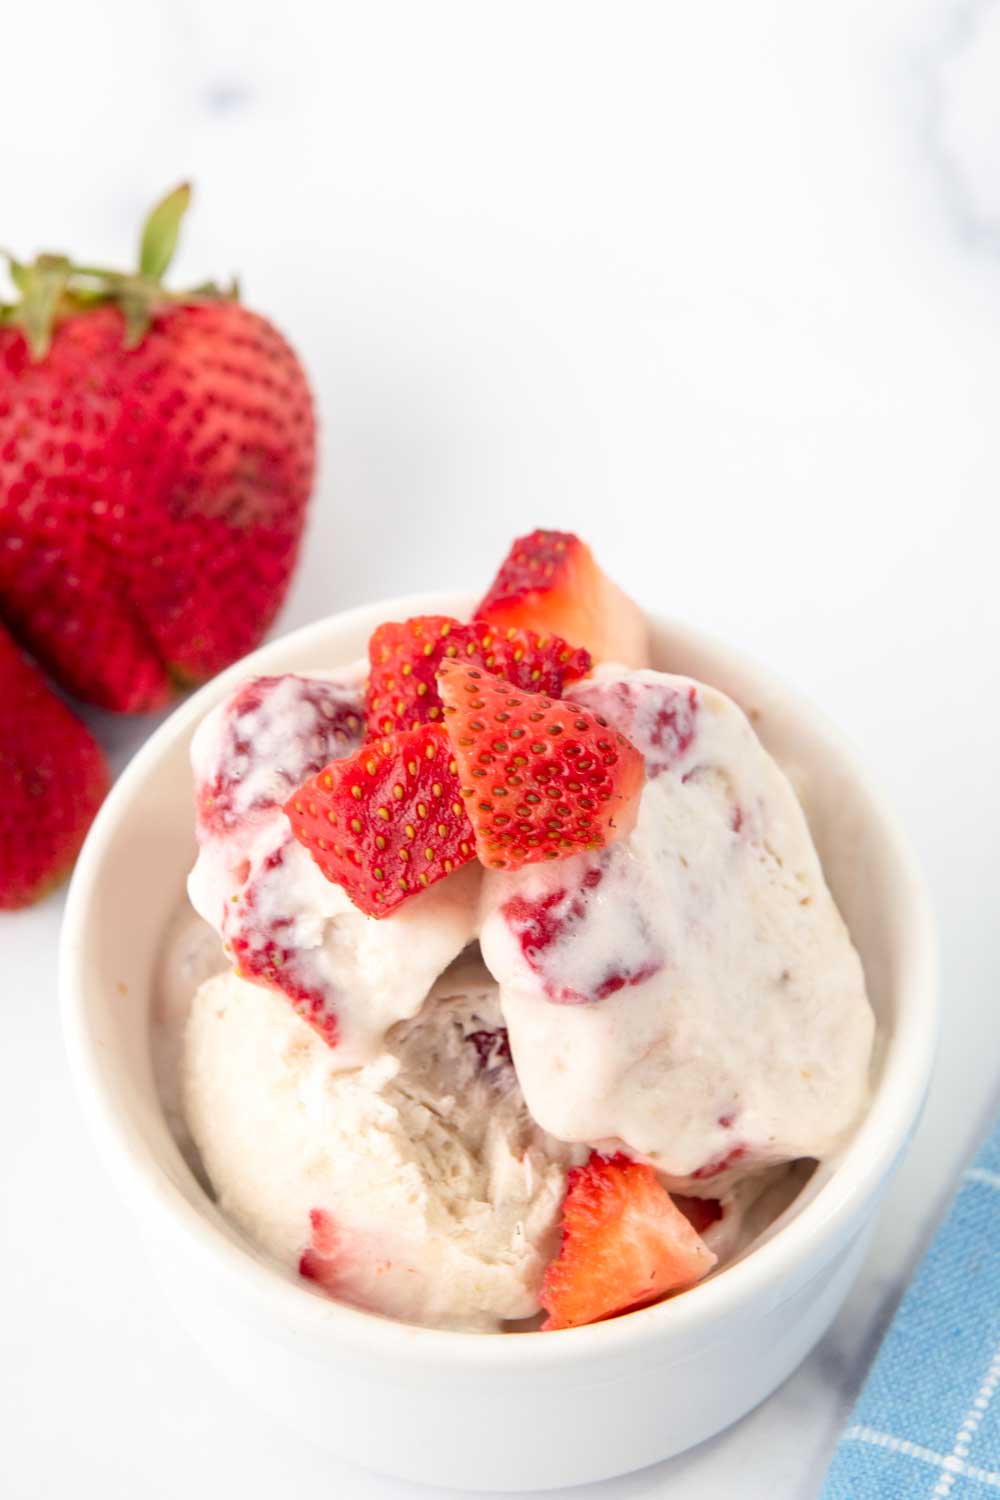 Strawberry banana dog ice cream in a white bowl.